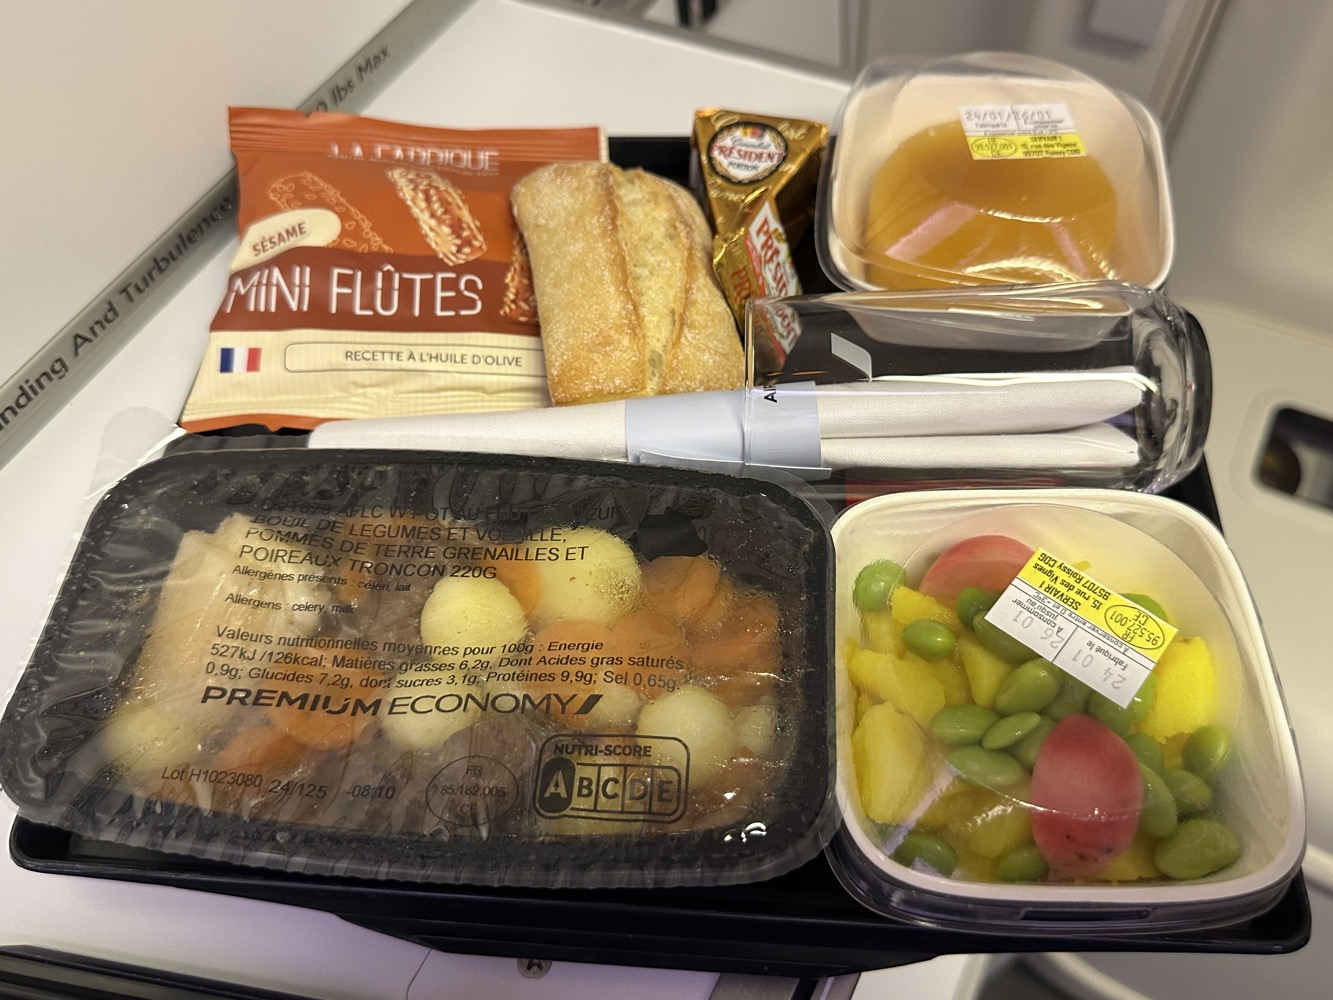 Premium Economy Class food on Air France